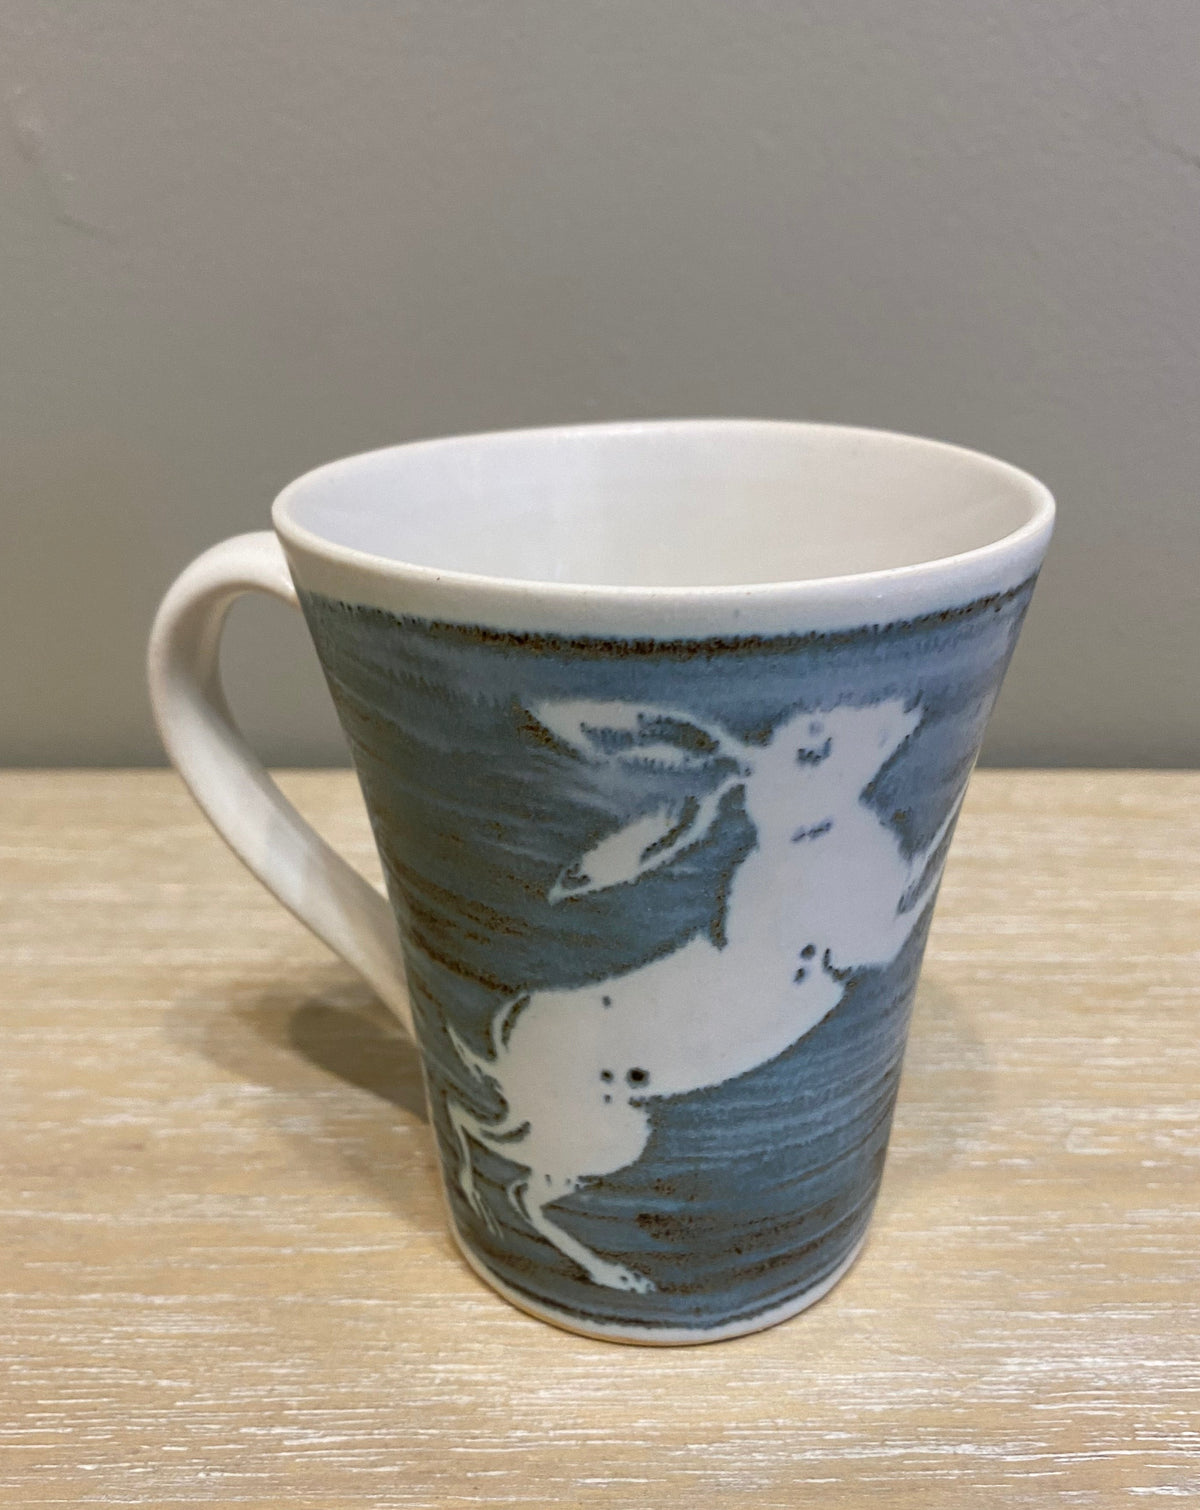 Hare Design Pottery Mug by Neil Tregear